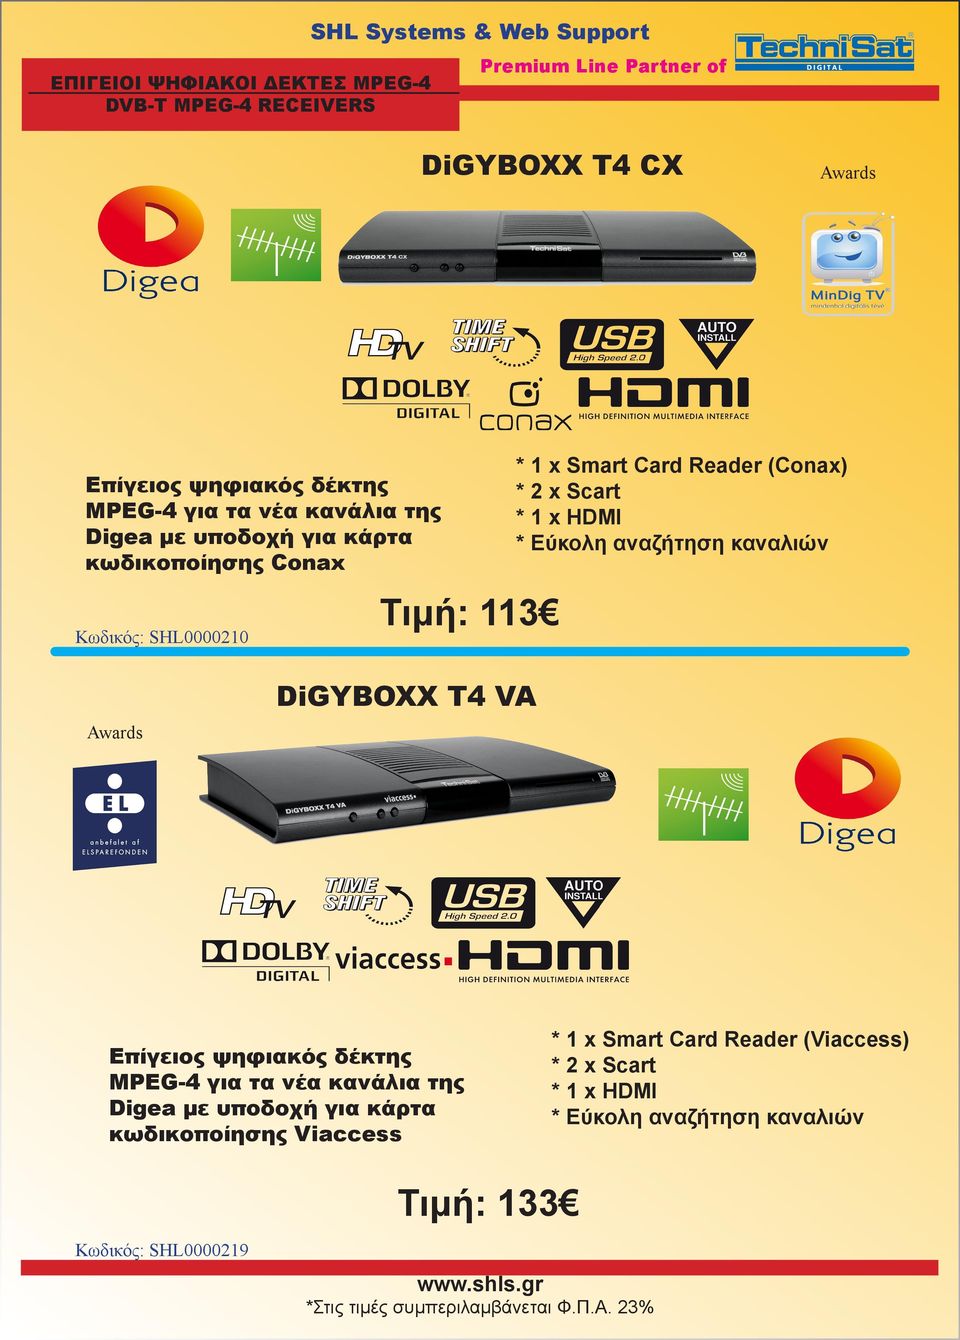 HDMI * Εύκολη αναζήτηση καναλιών DiGYBOXX T4 VA Επίγειος ψηφιακός δέκτης MPEG-4 για τα νέα κανάλια της Digea με υποδοχή για κάρτα